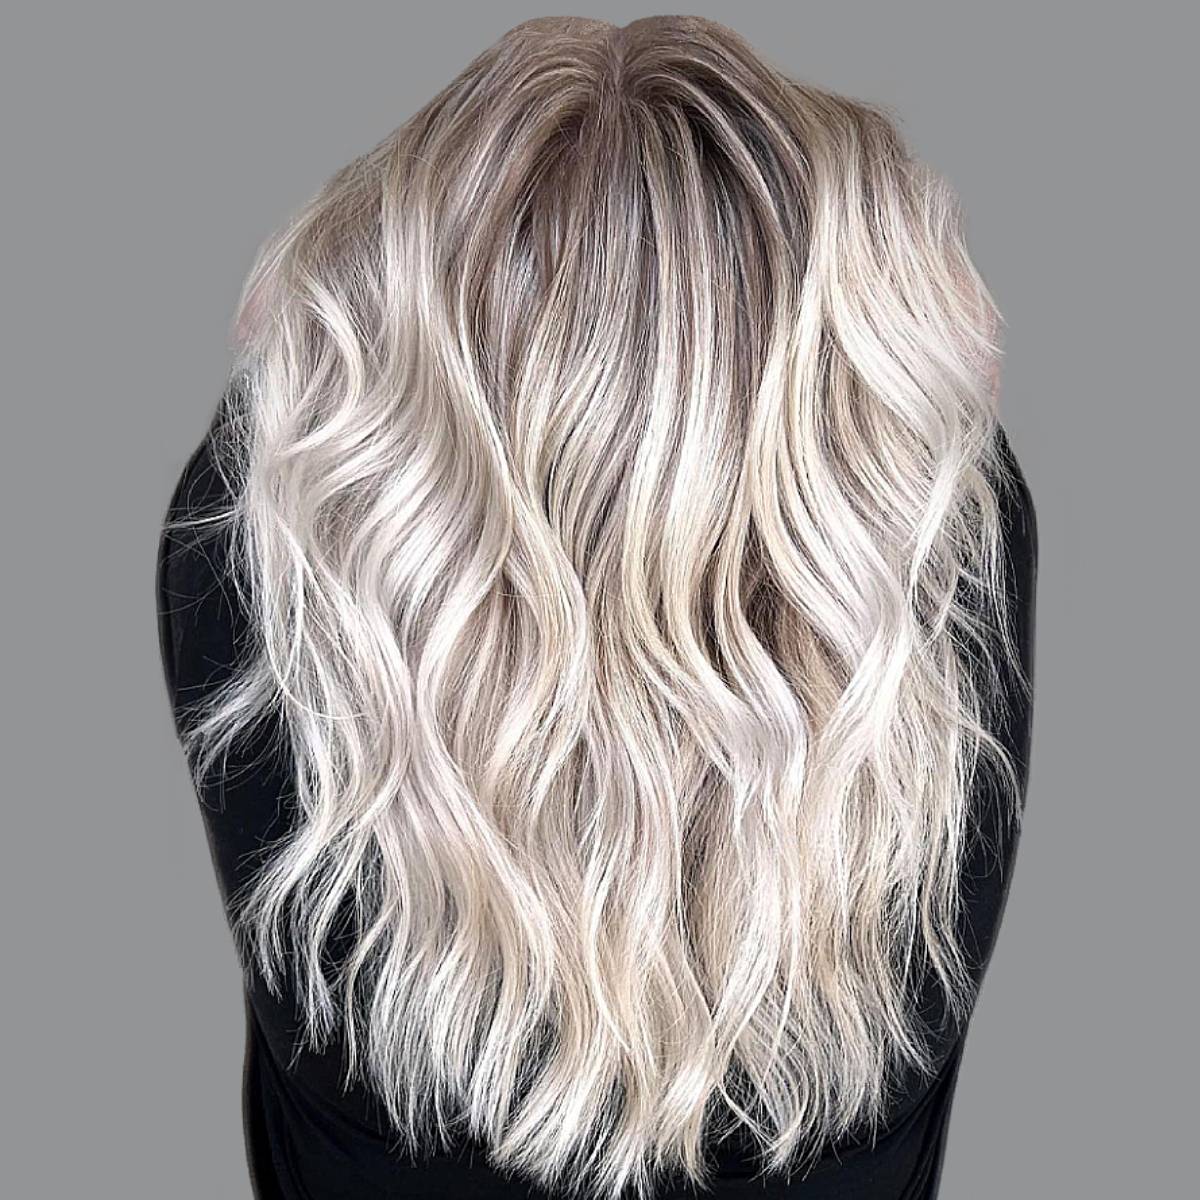 Platinum blonde hair with volume